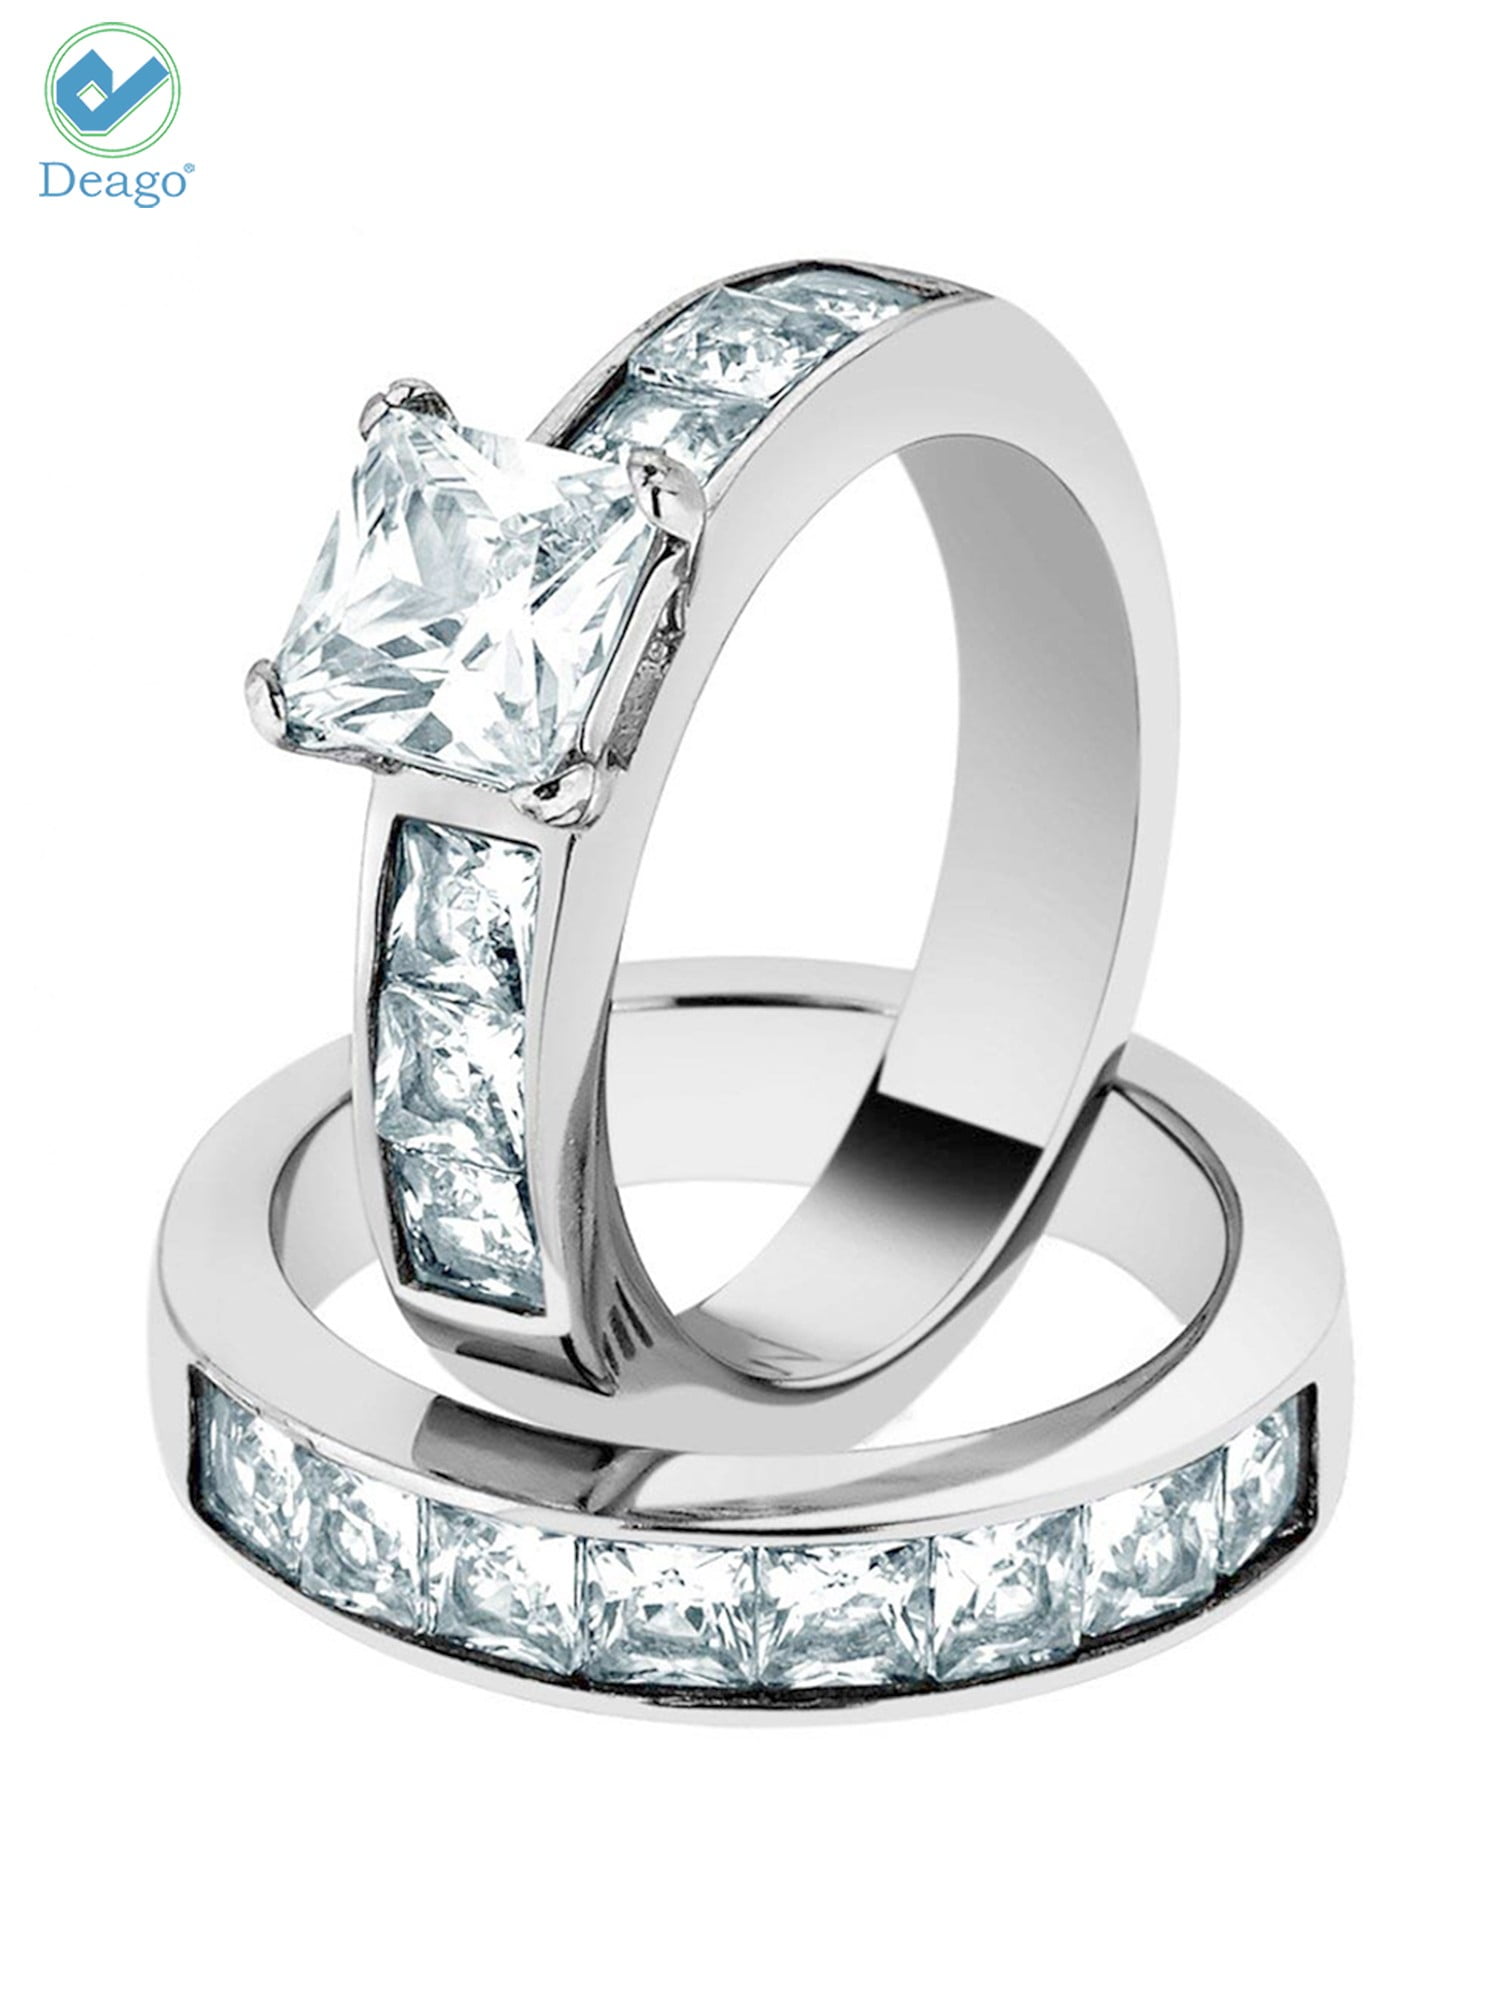 Size 6 White Topaz Zircon Wedding Ring Black Rhodium Plated Engagement Band 